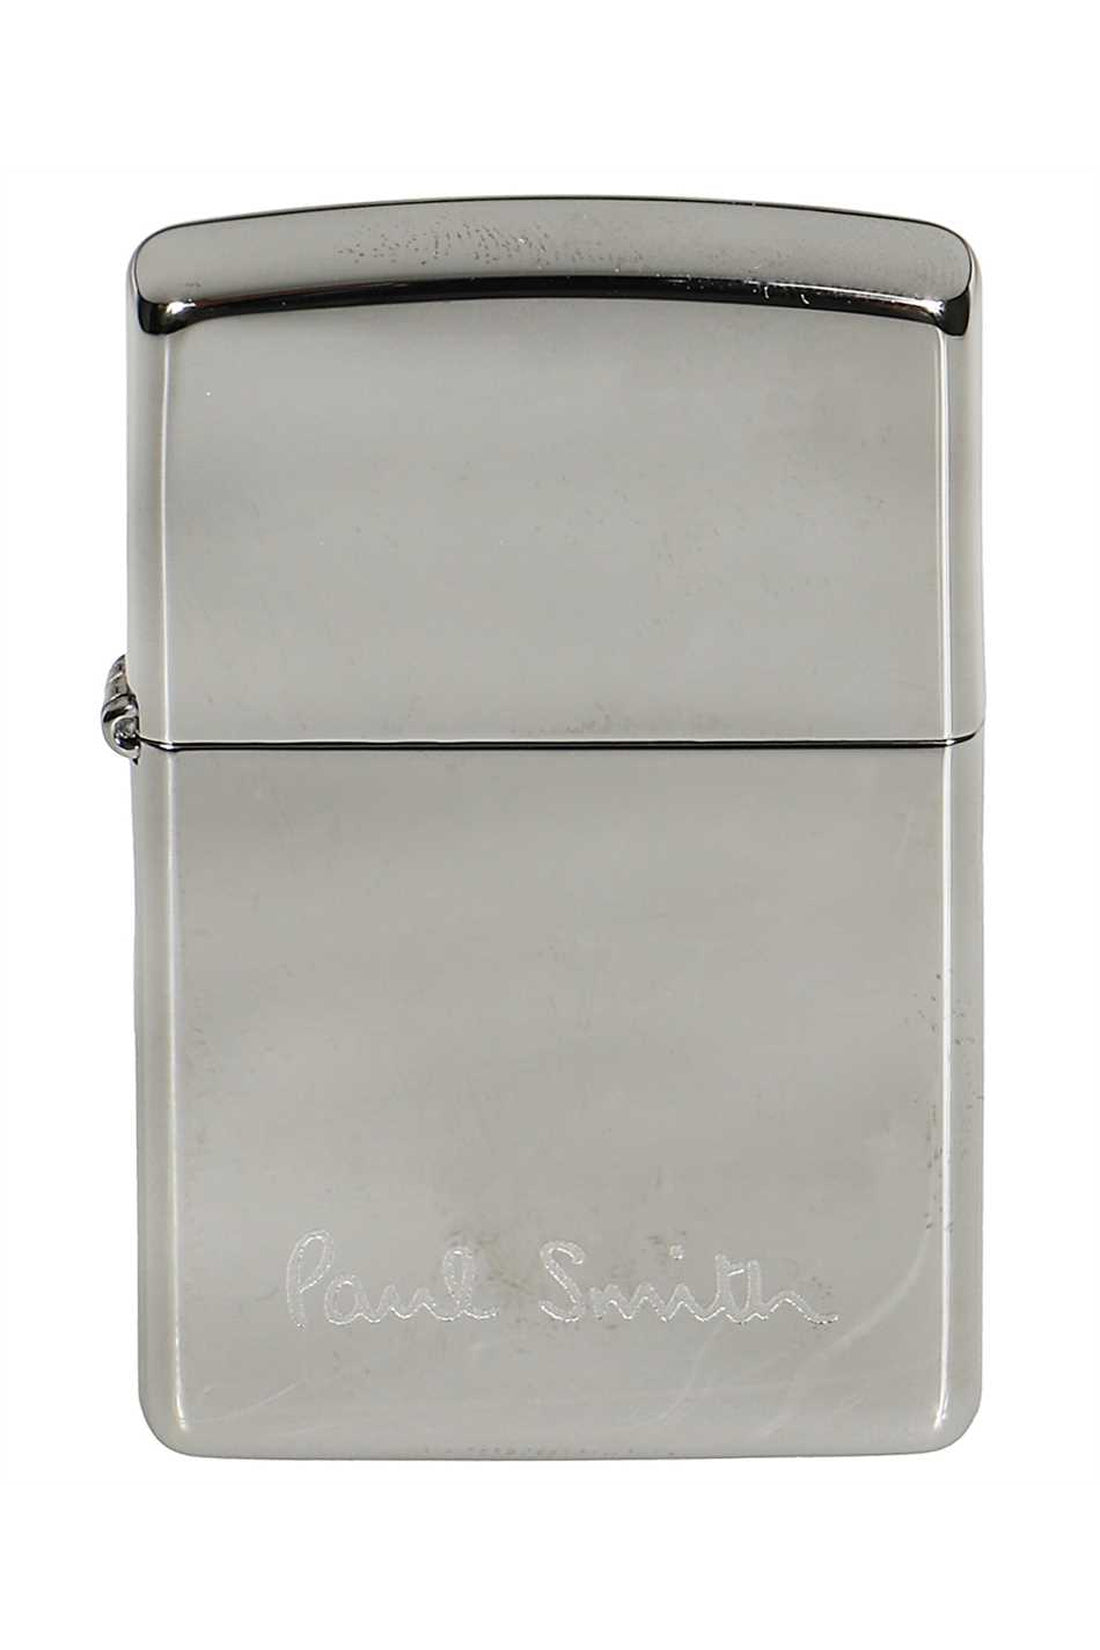 Paul Smith-OUTLET-SALE-Zippo lighter-ARCHIVIST